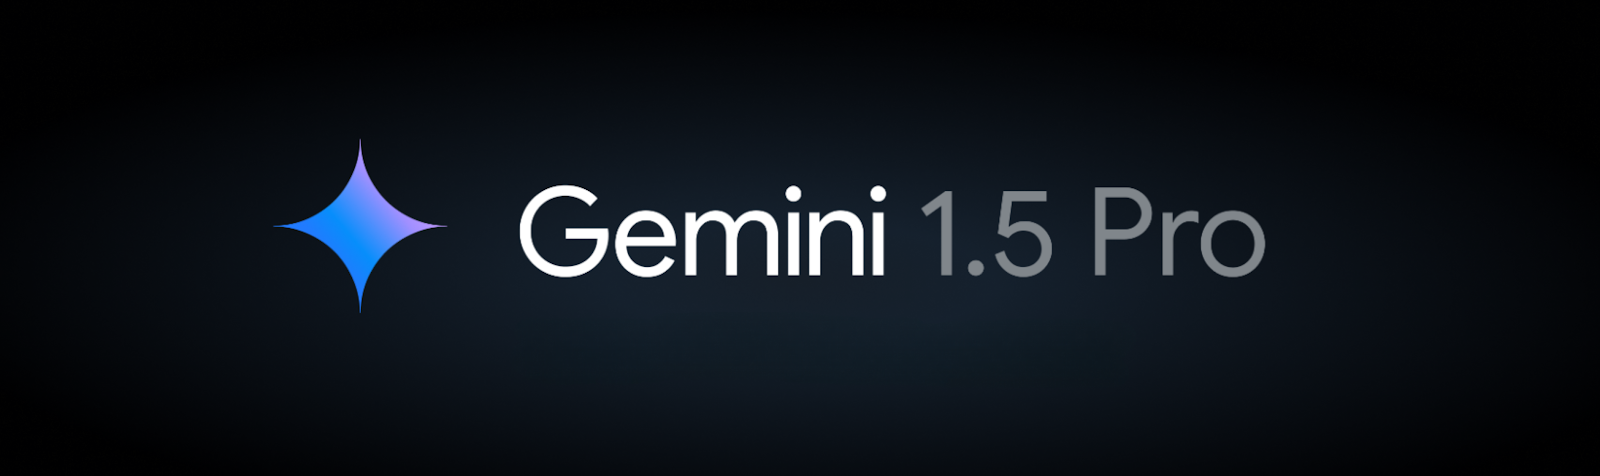 Google lance Gemini 1.5 Pro